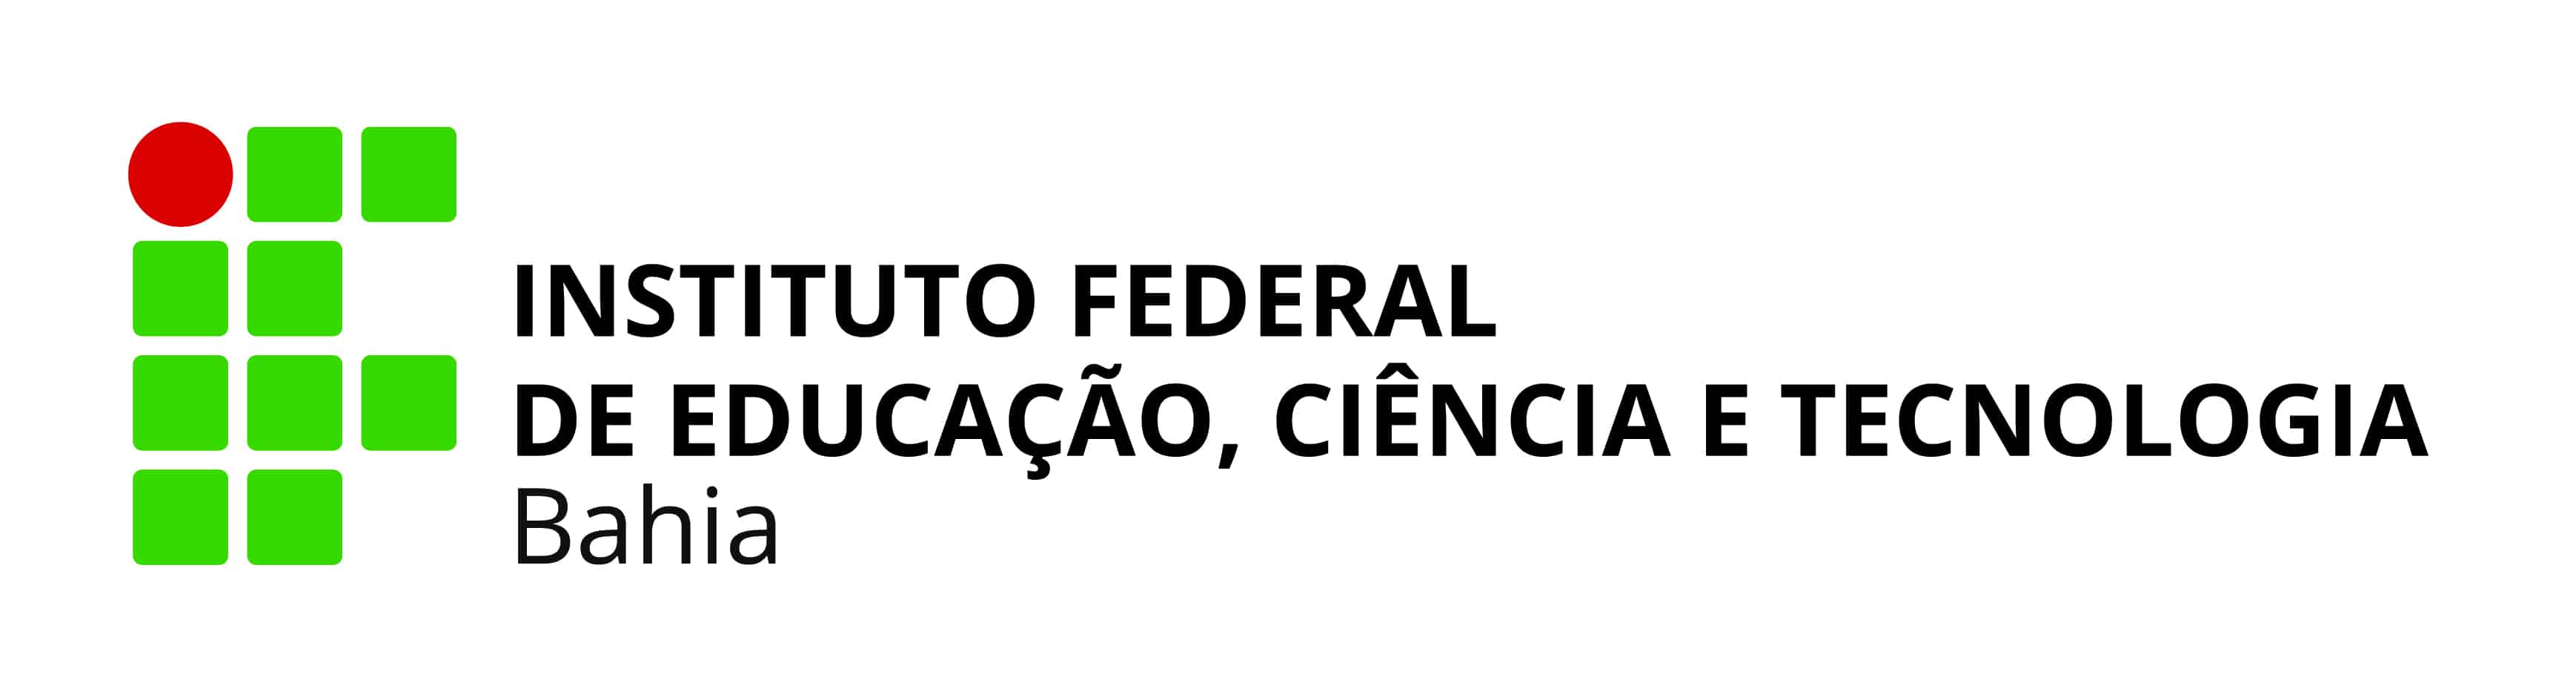 IFBA - Instituto Federal da Bahia